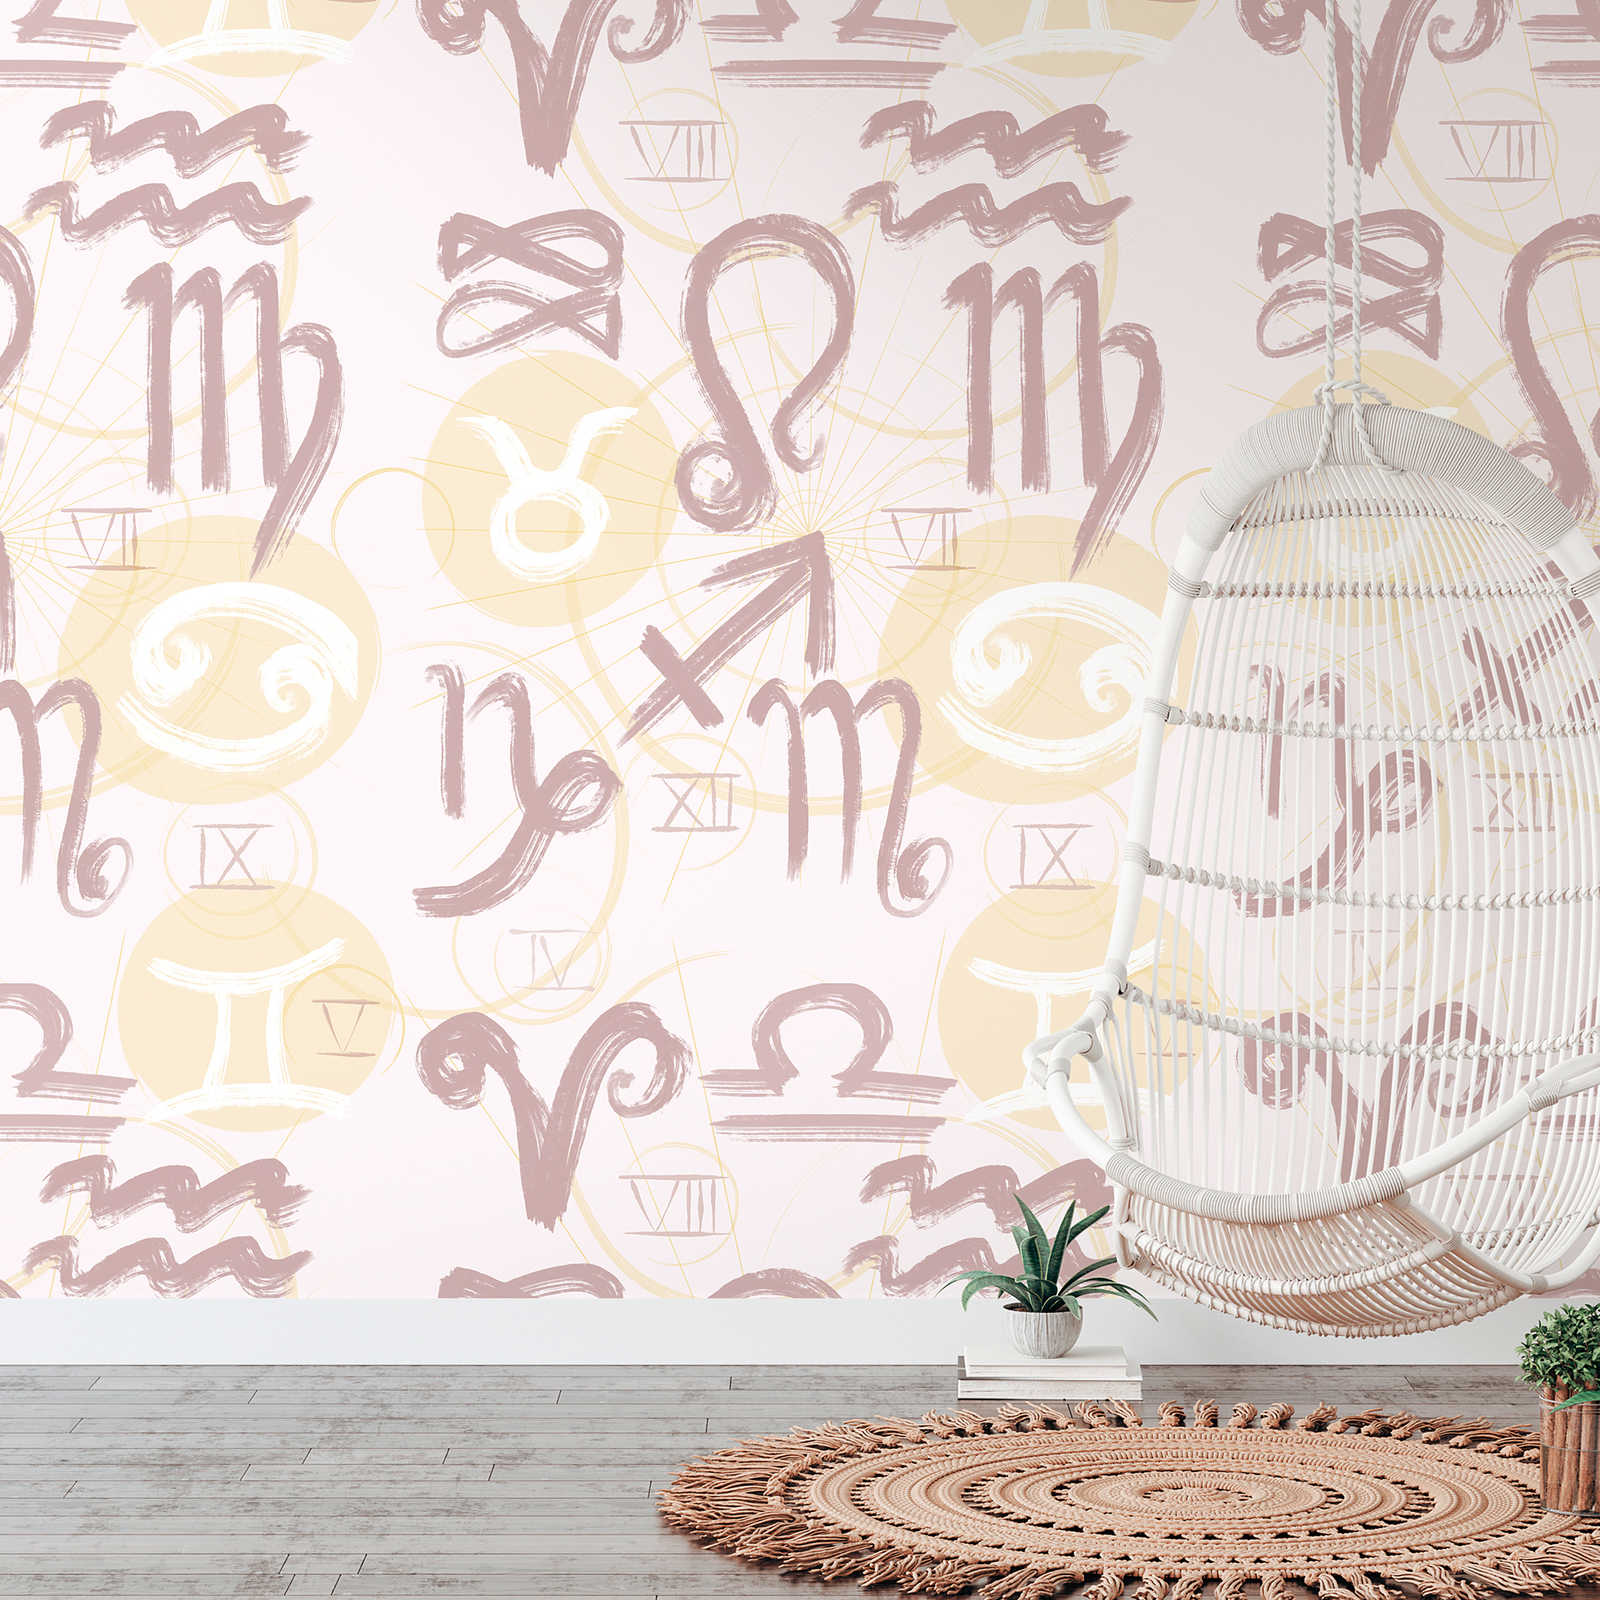 Wallpaper with zodiac symbols and Roman numerals - cream, yellow, pink
